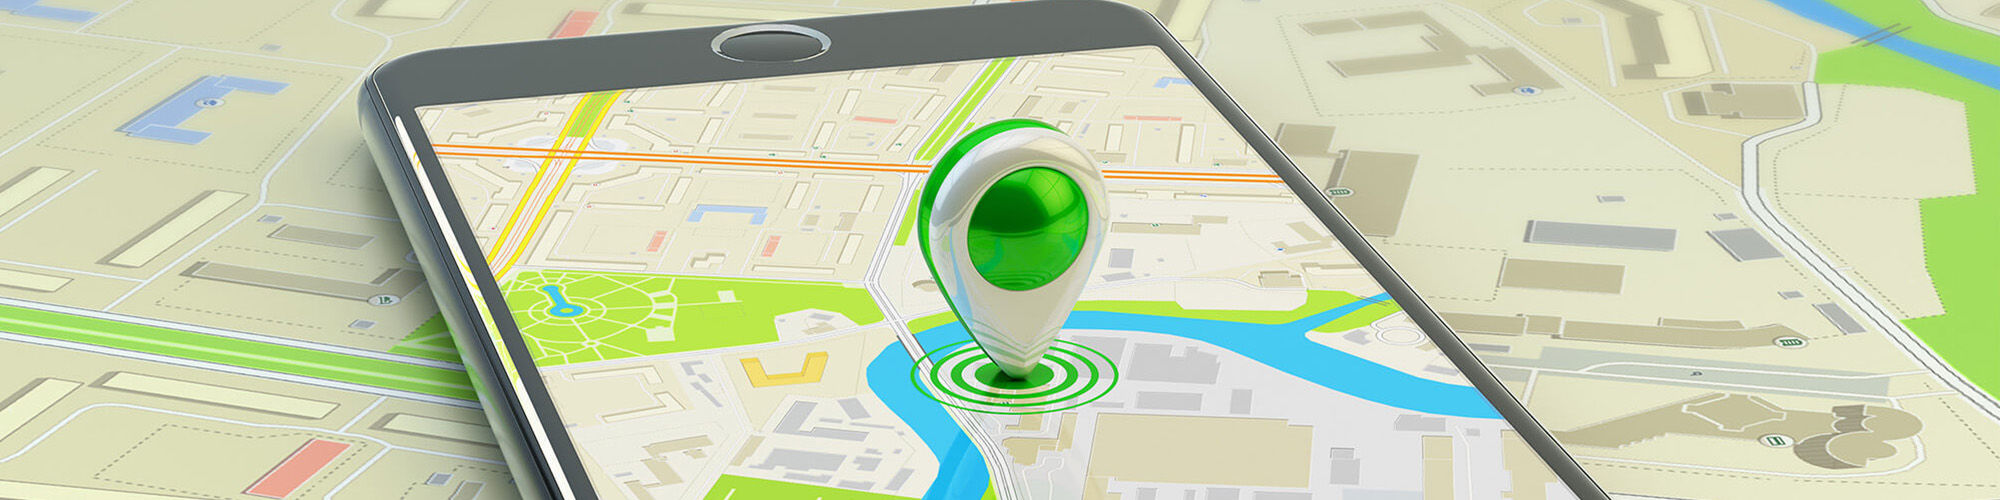 GPS - Surveillance Products